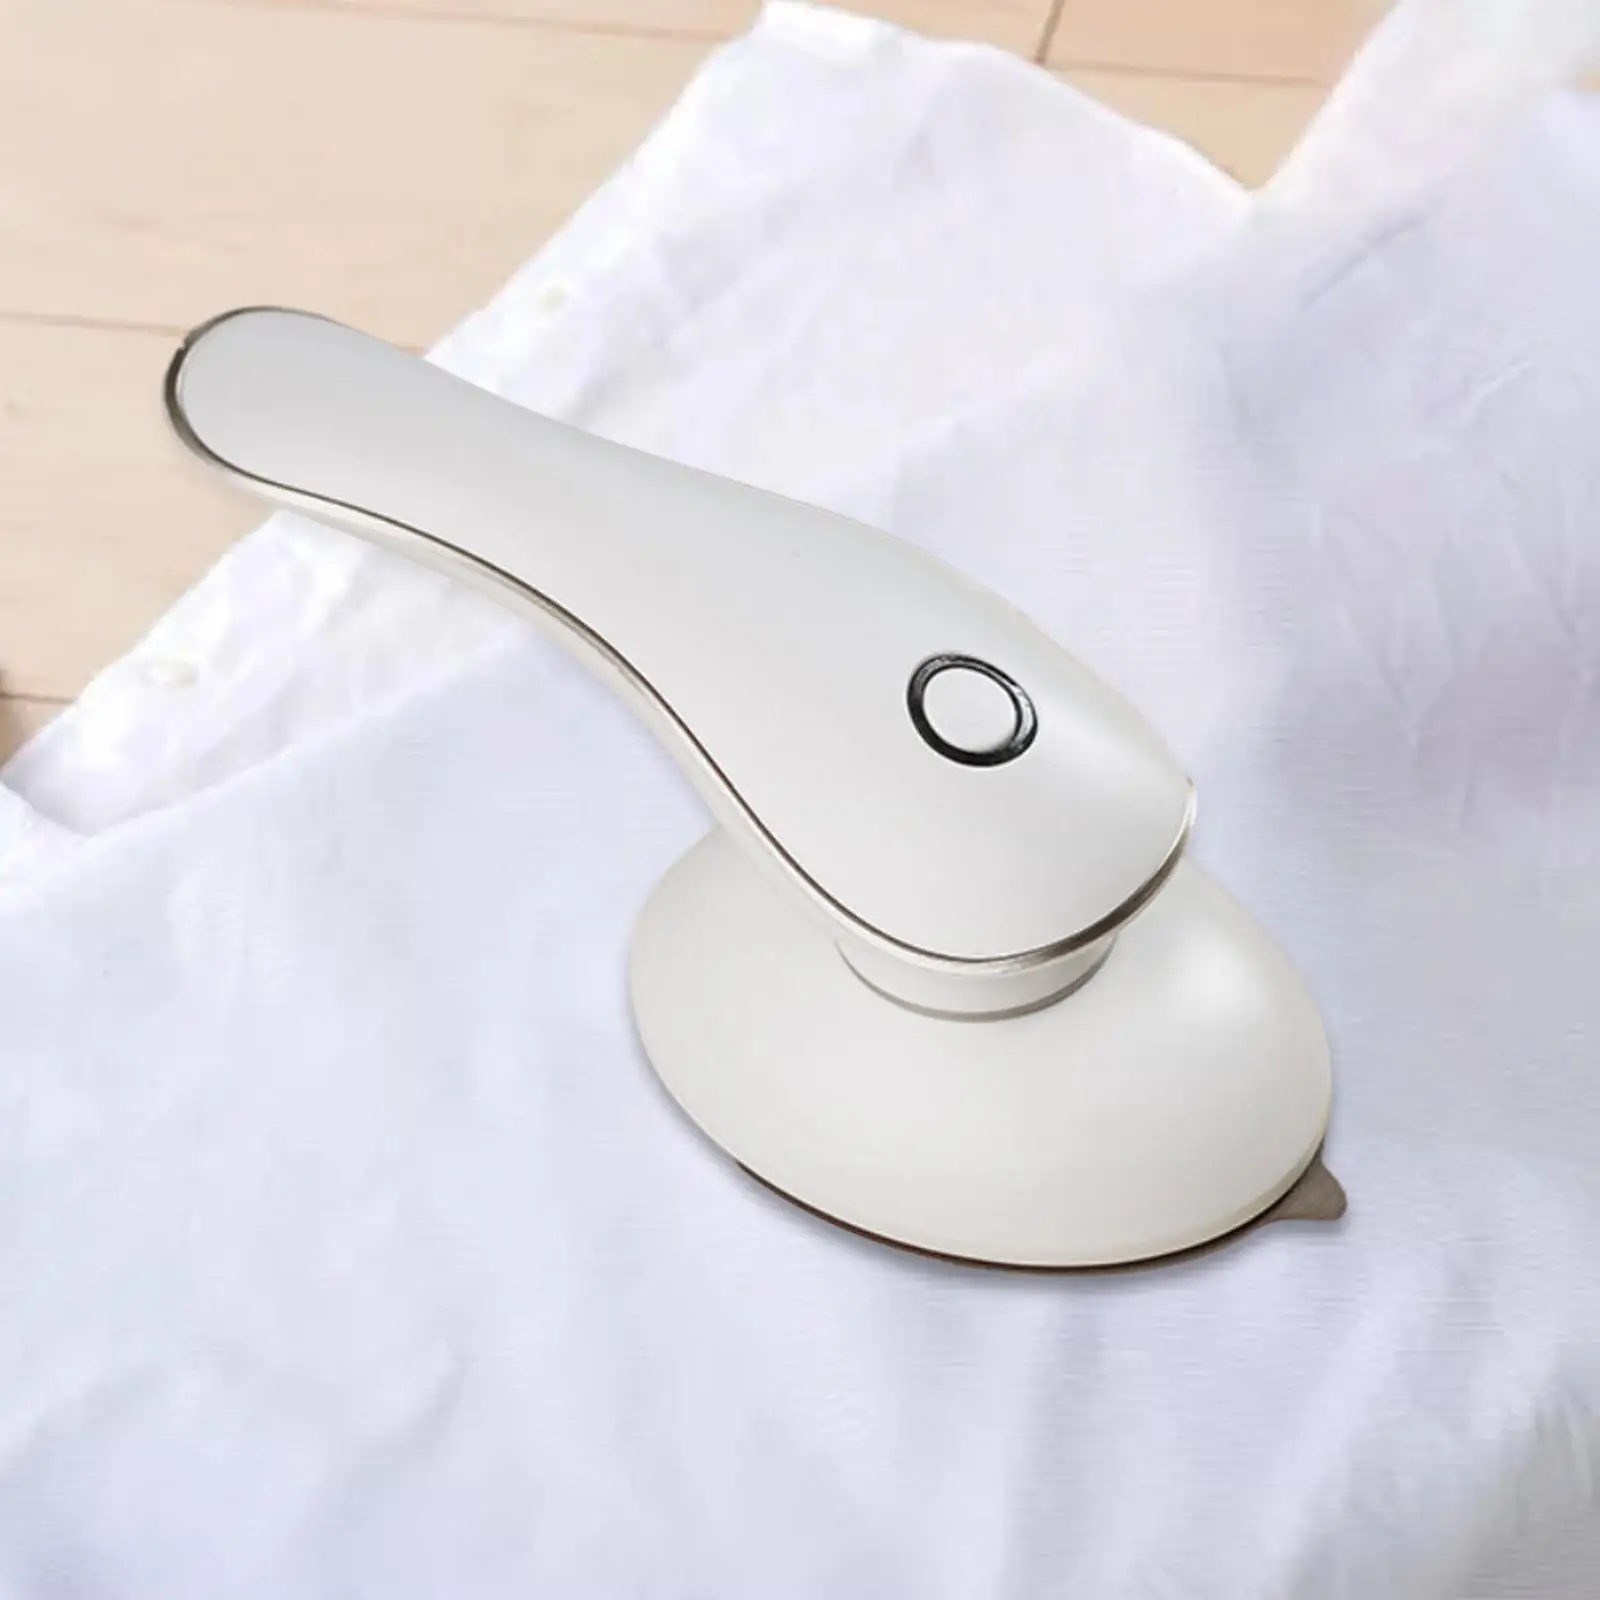 Handheld Steamer Cleaner Dry and Wet Use Multipurpose Handheld Ironing Machine Travel Steamer for Home Indoor Dating Dorm Hotel